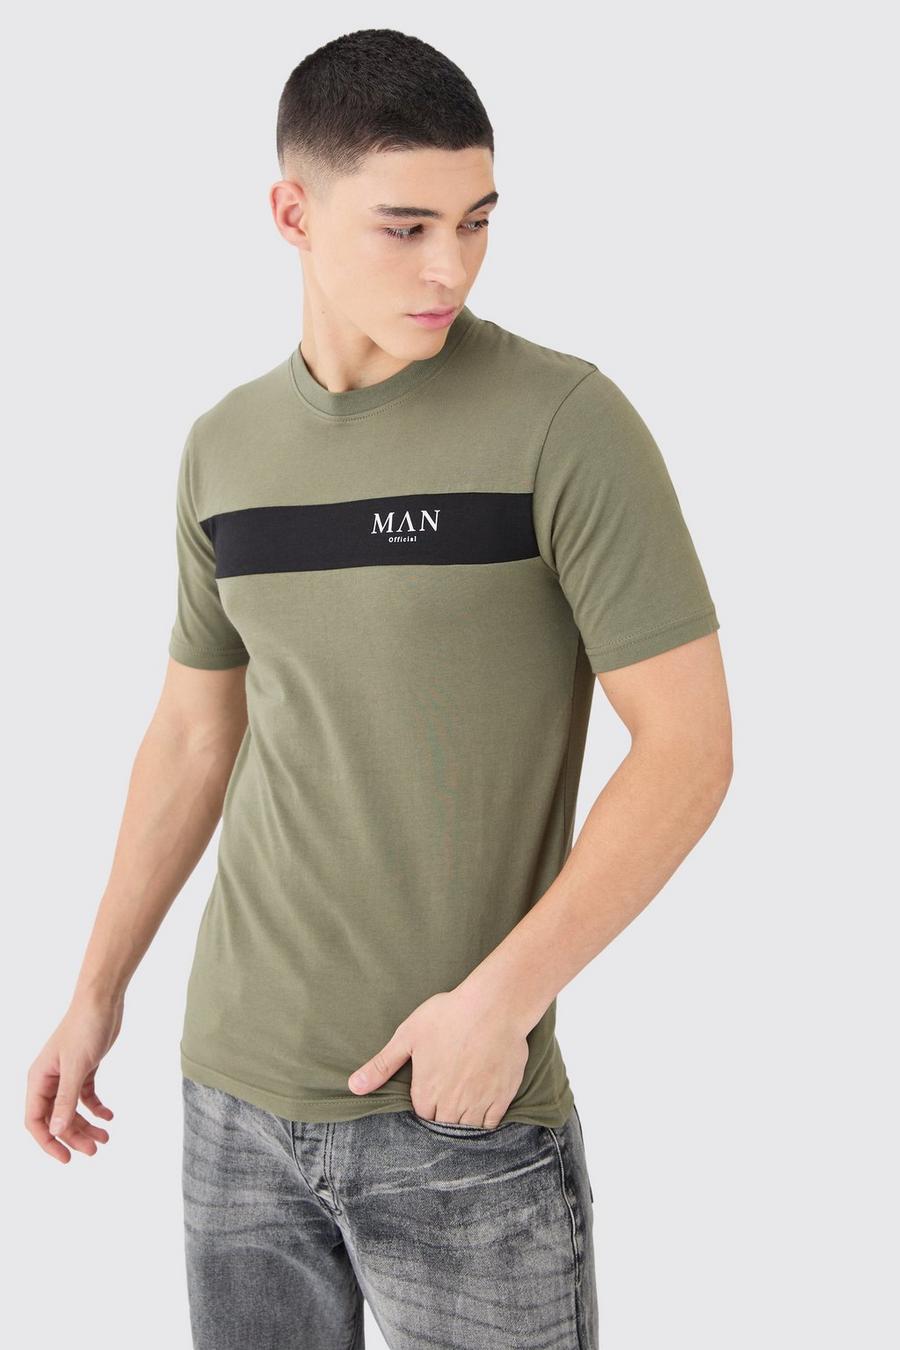 Man Roman Muscle-Fit Colorblock T-Shirt, Olive